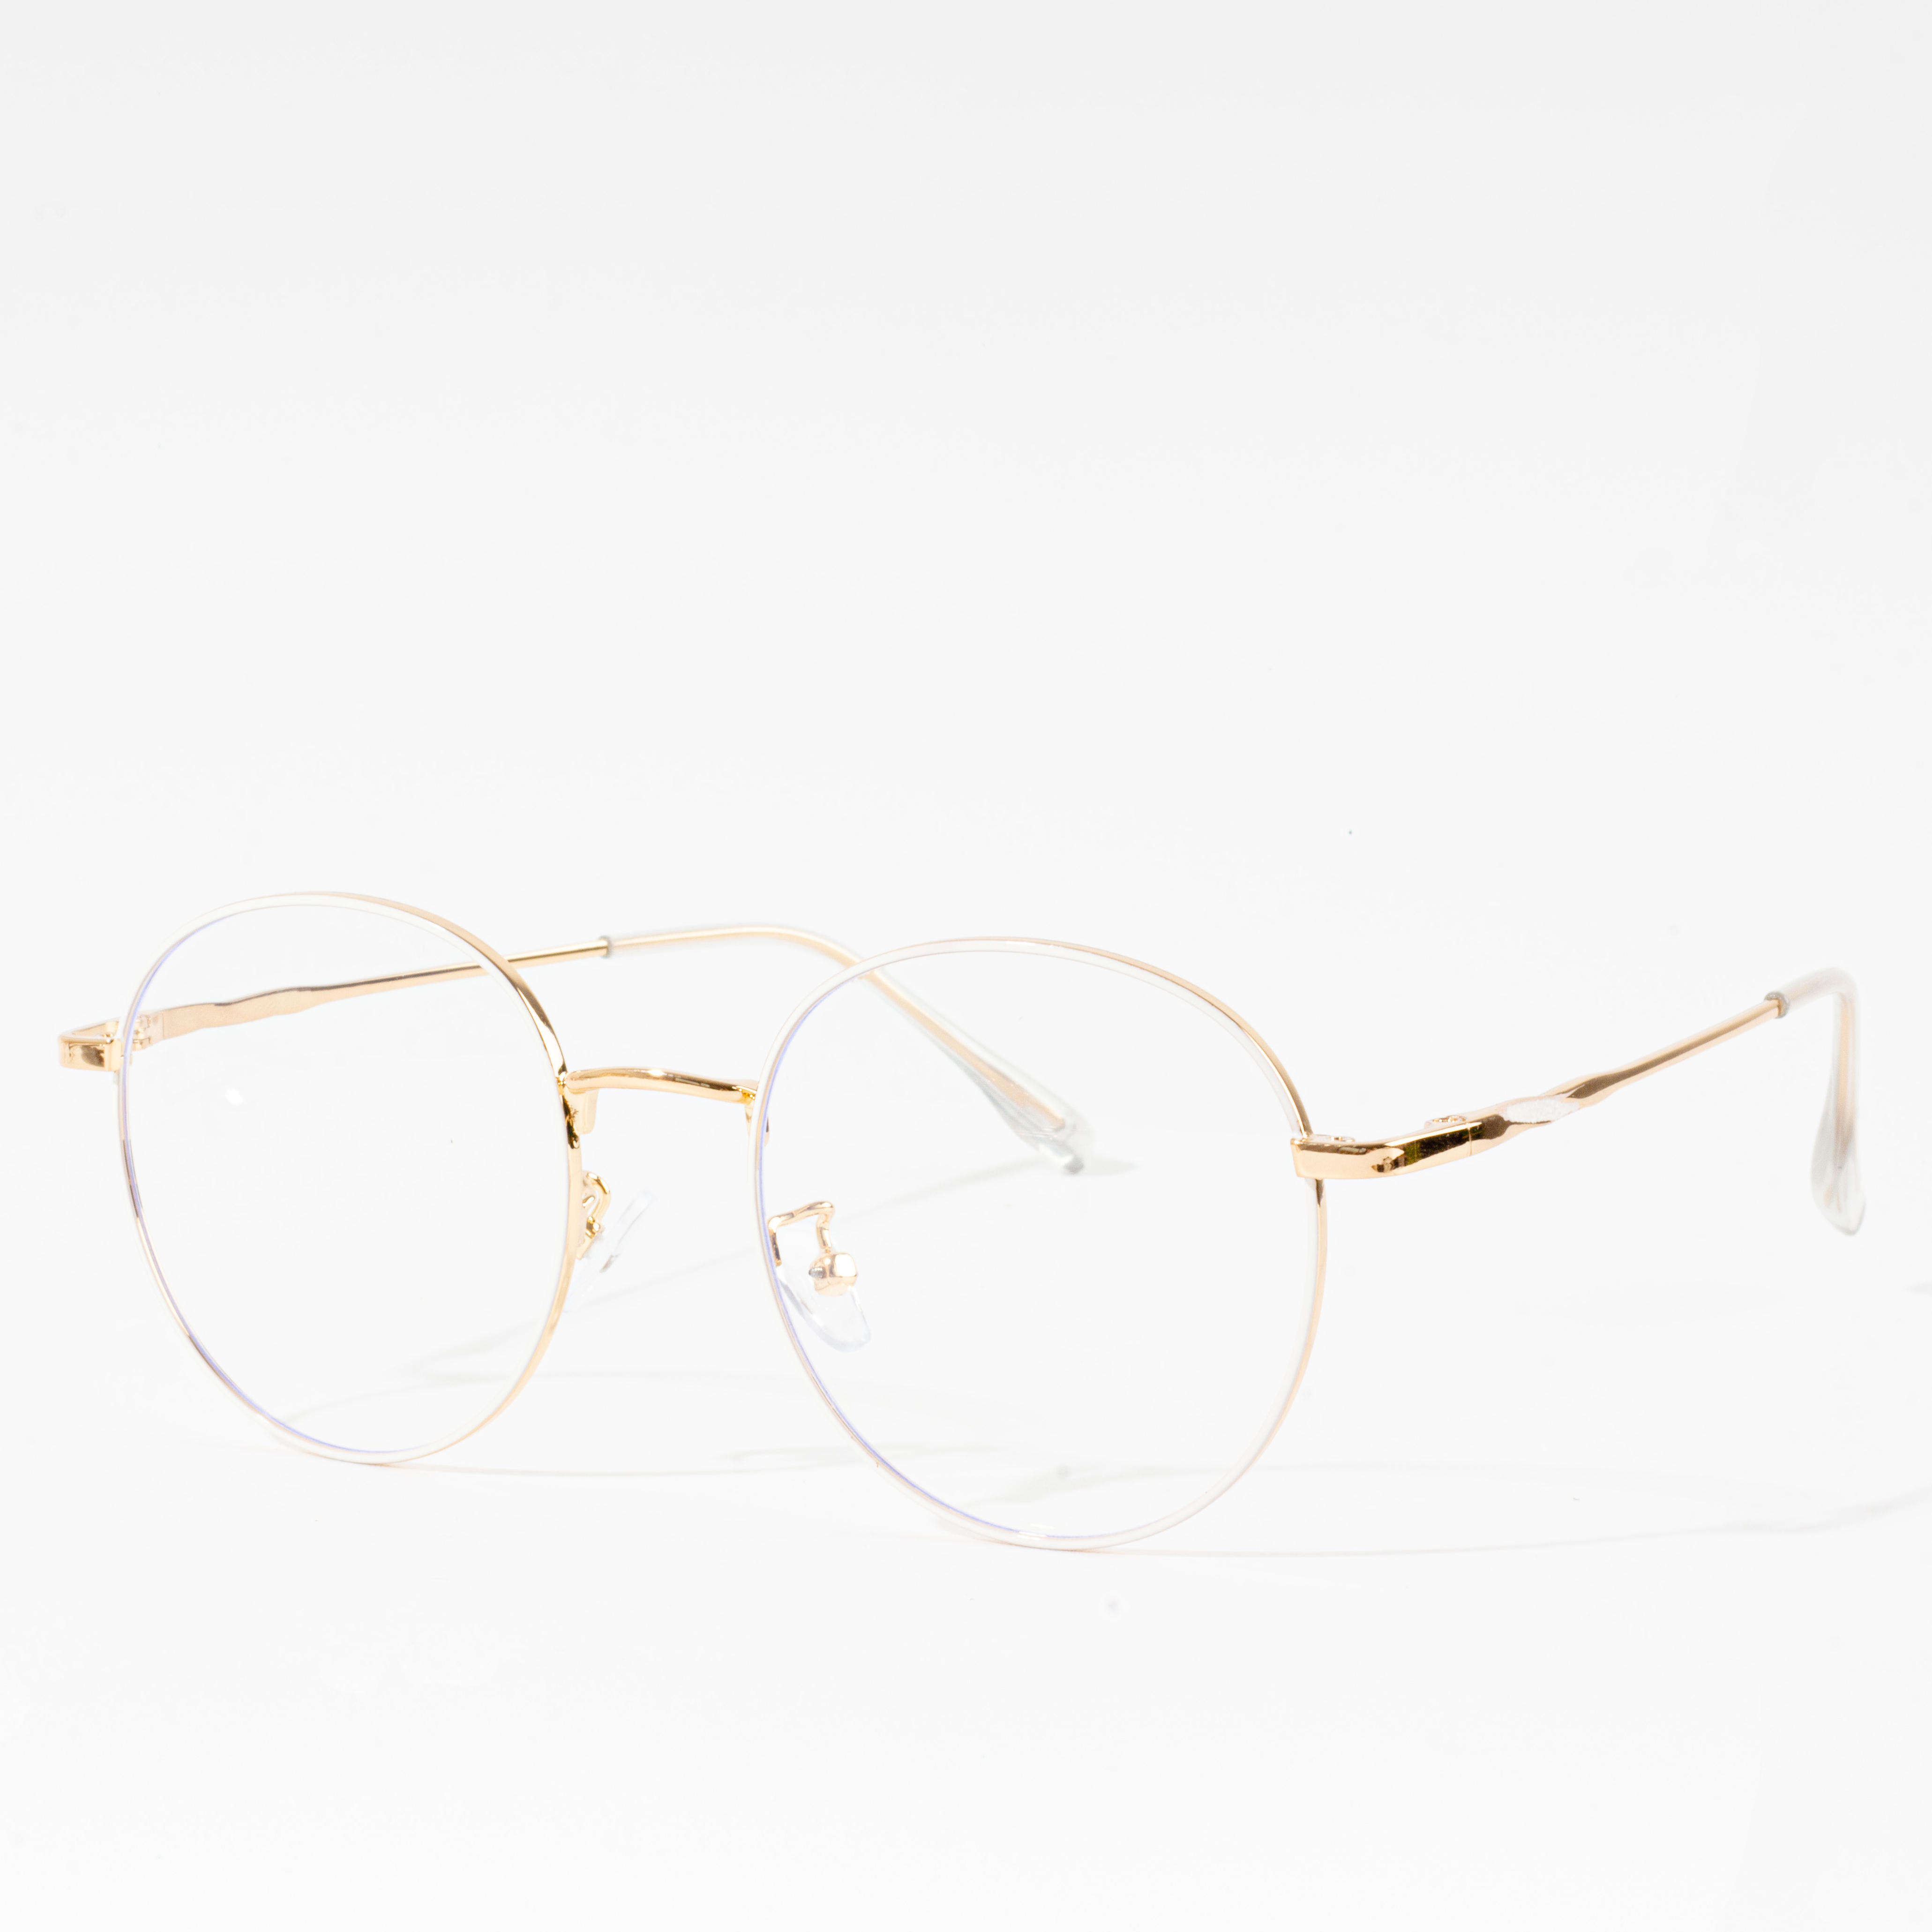 bingkai kacamata modern